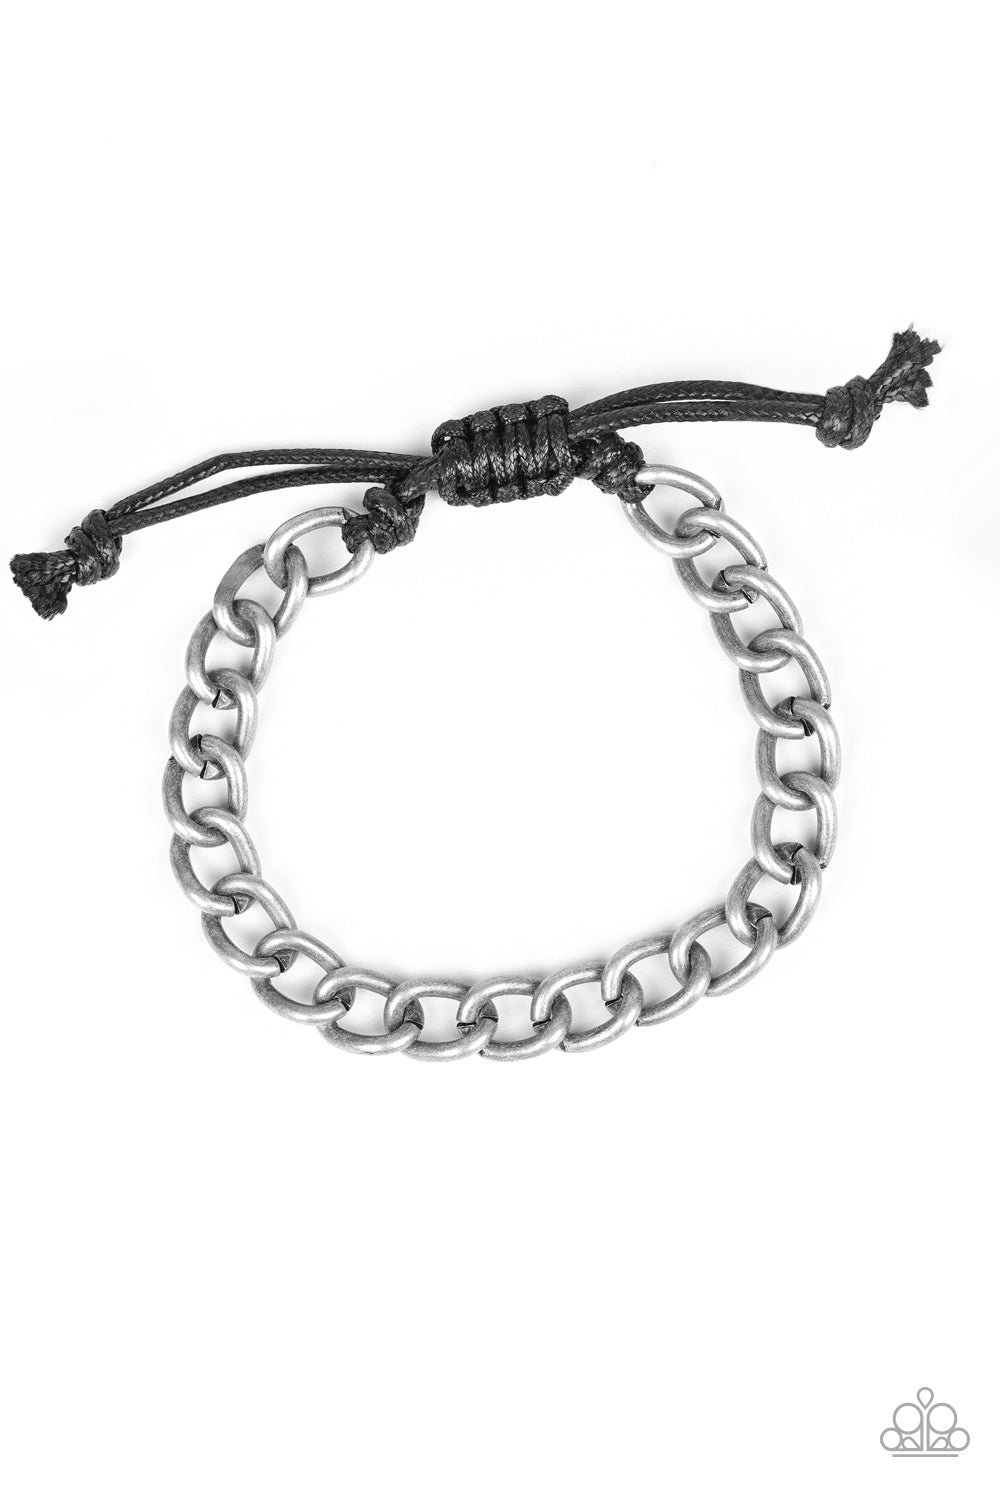 Sideline Silver
Urban Bracelet